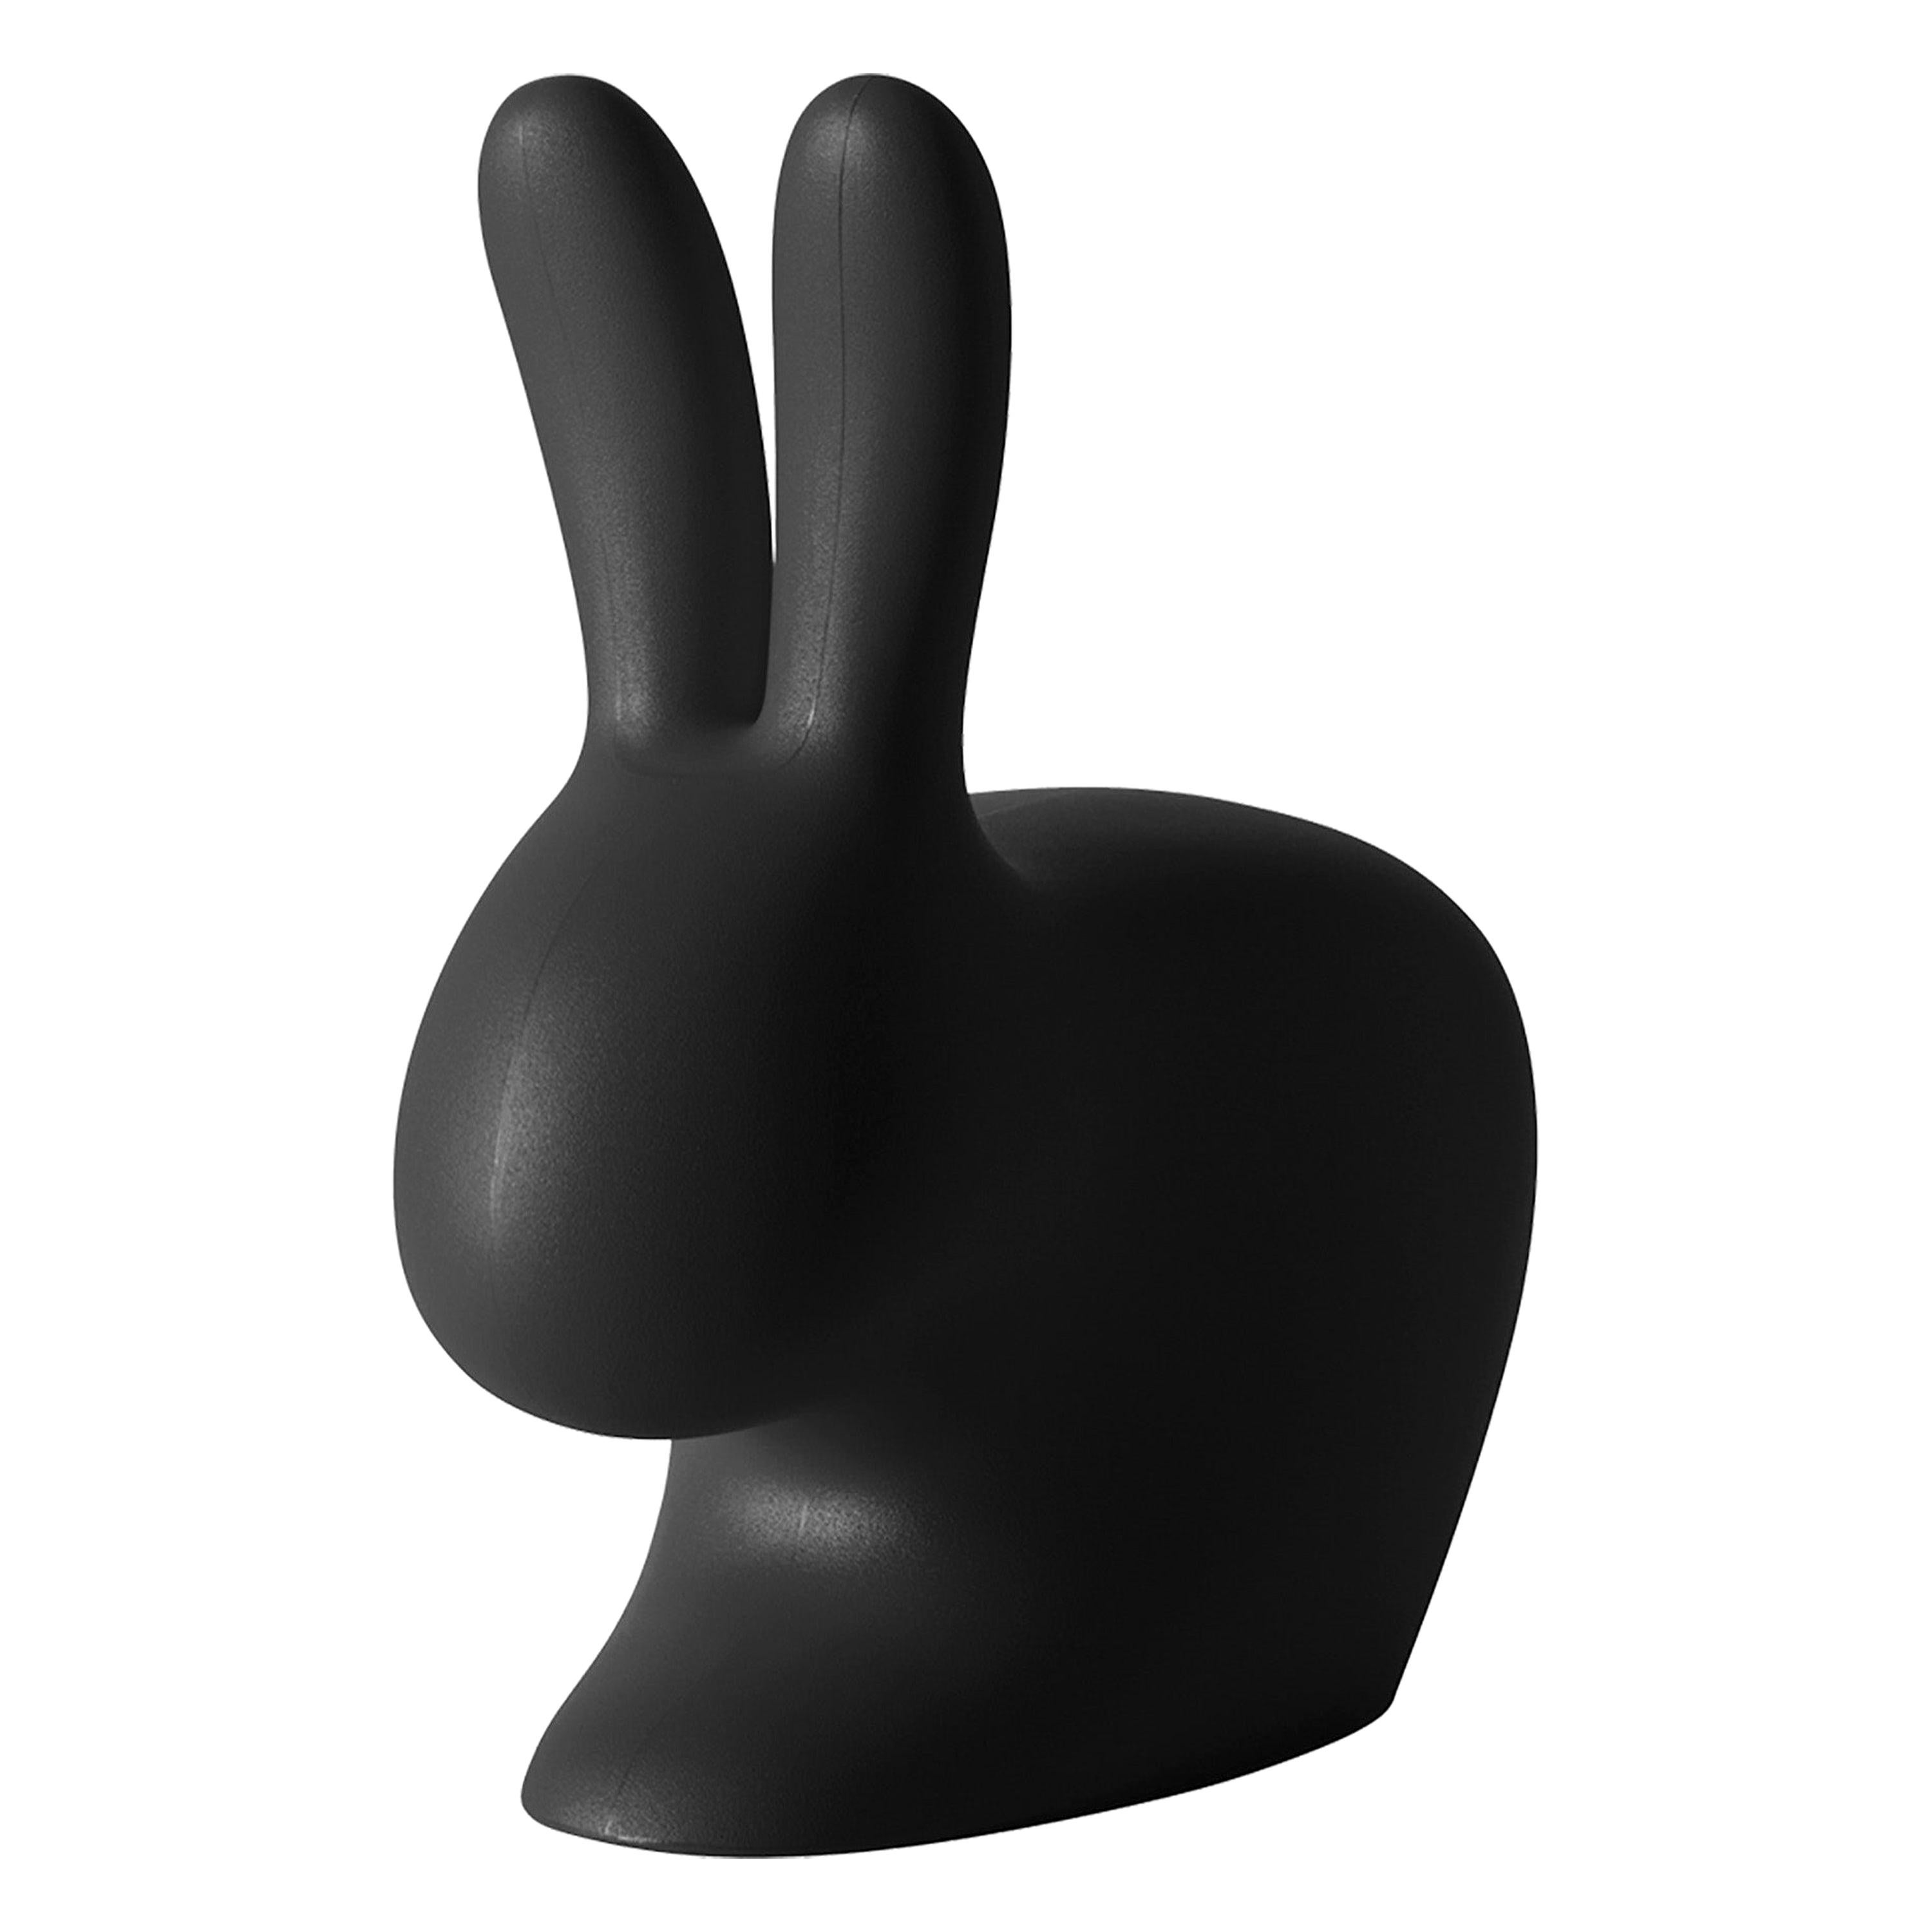 For Sale: Black Small Black Plastic Rabbit Doorstopper by Stefano Giovannoni